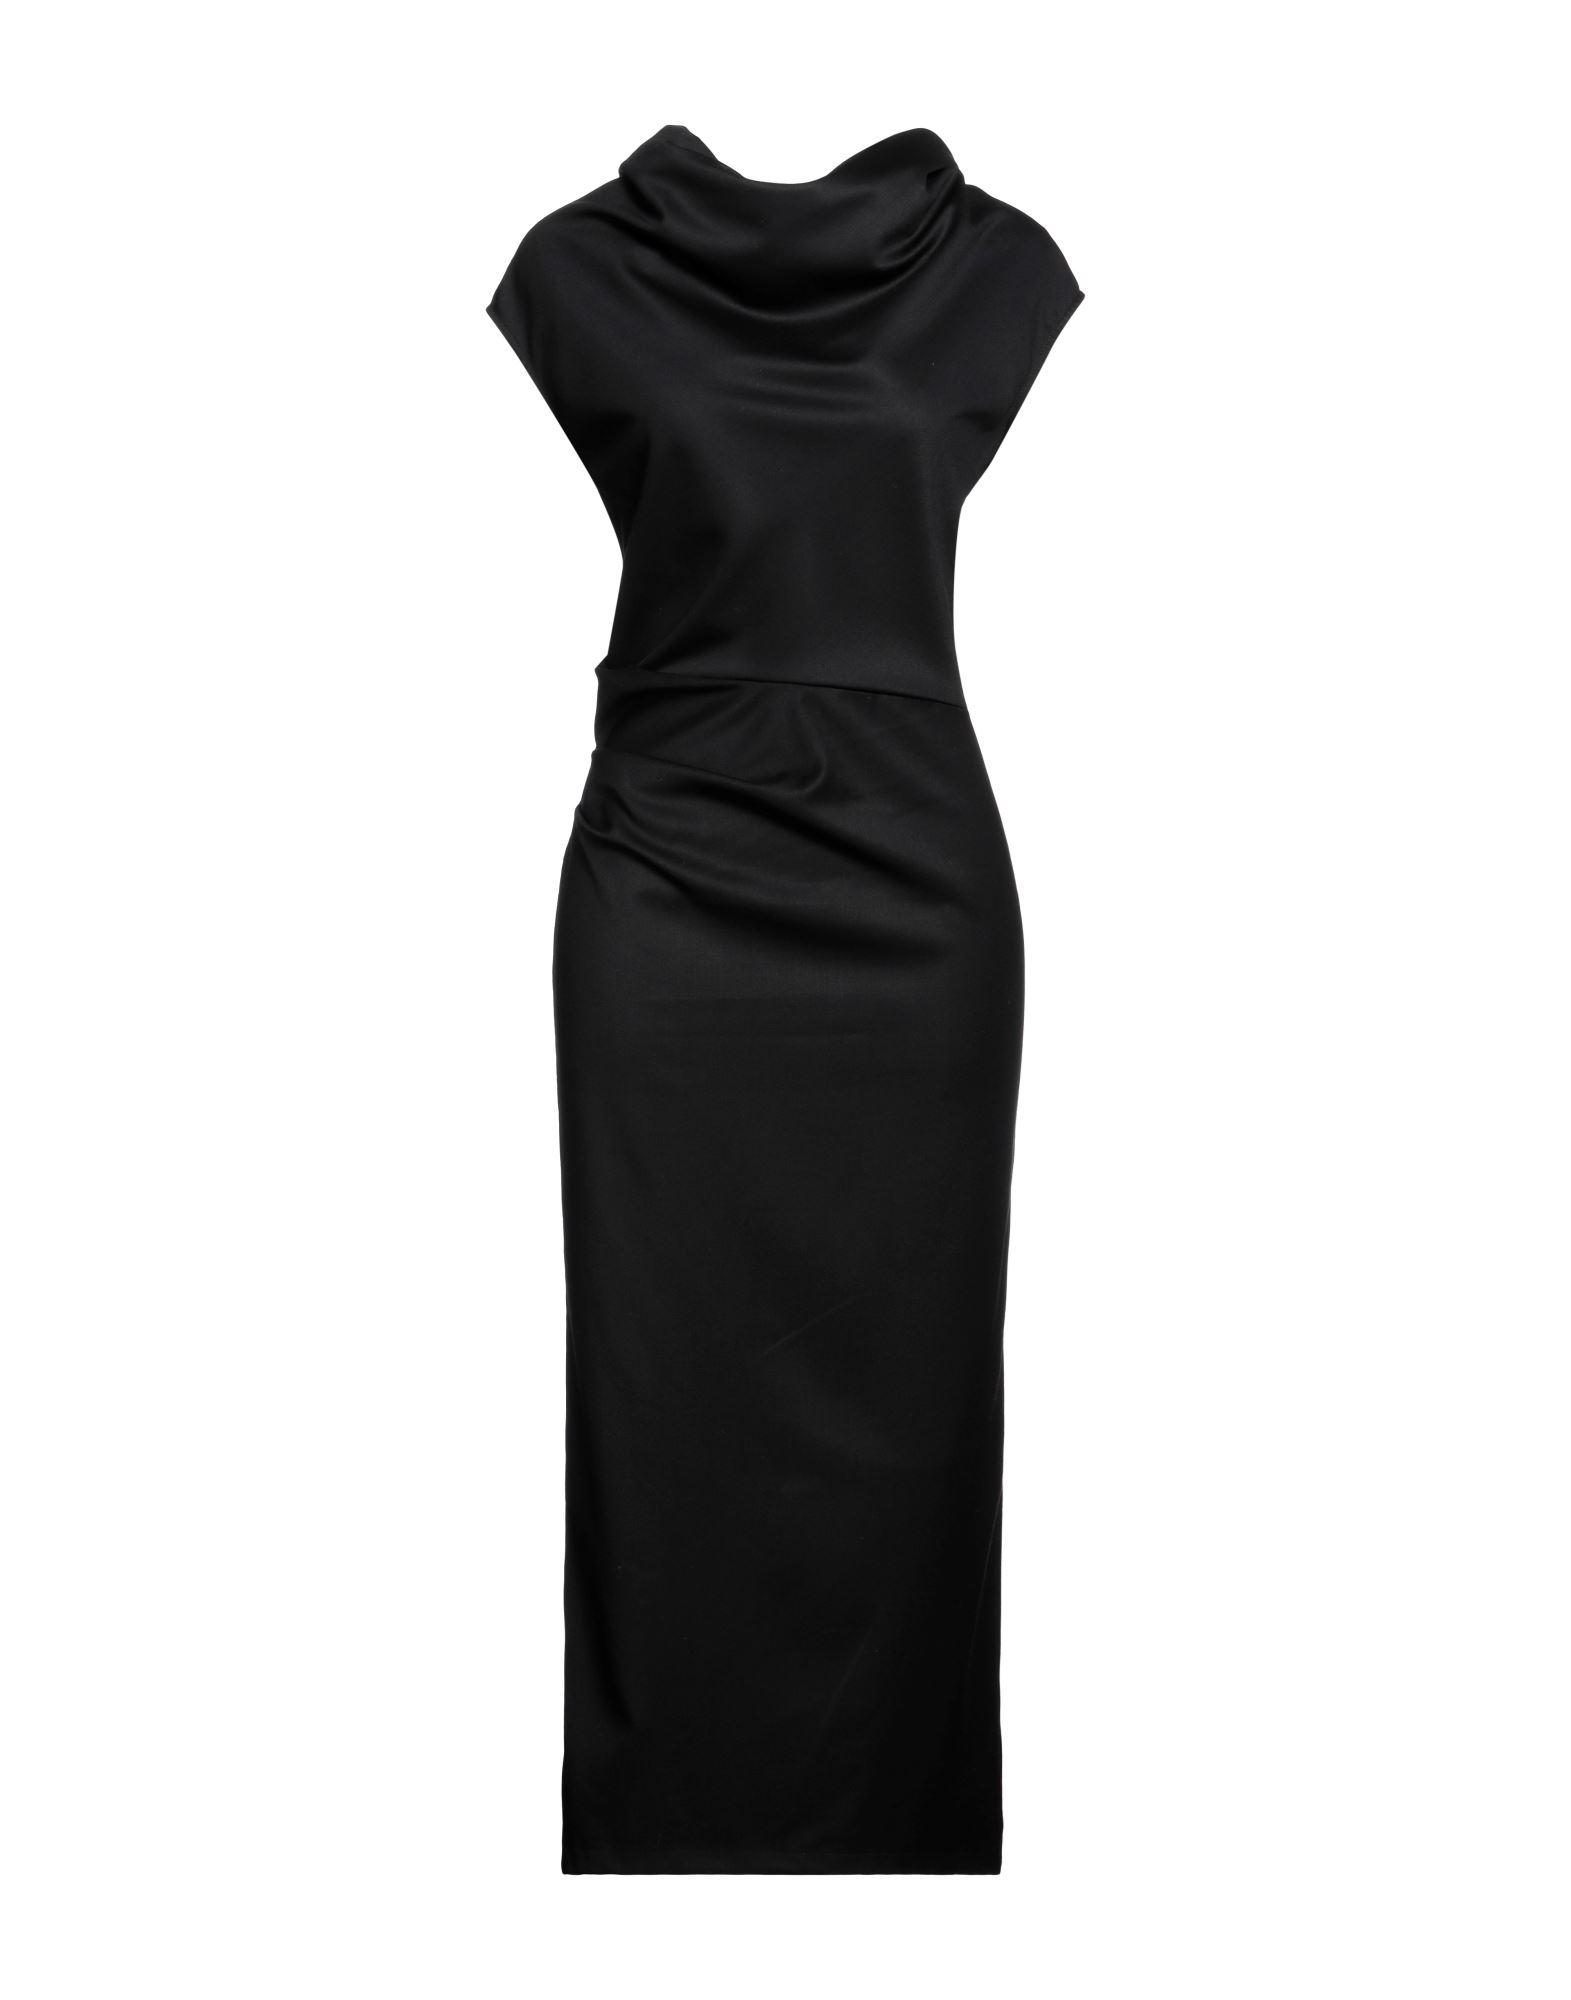 Souvenir Clubbing Midi Dress in Black | Lyst